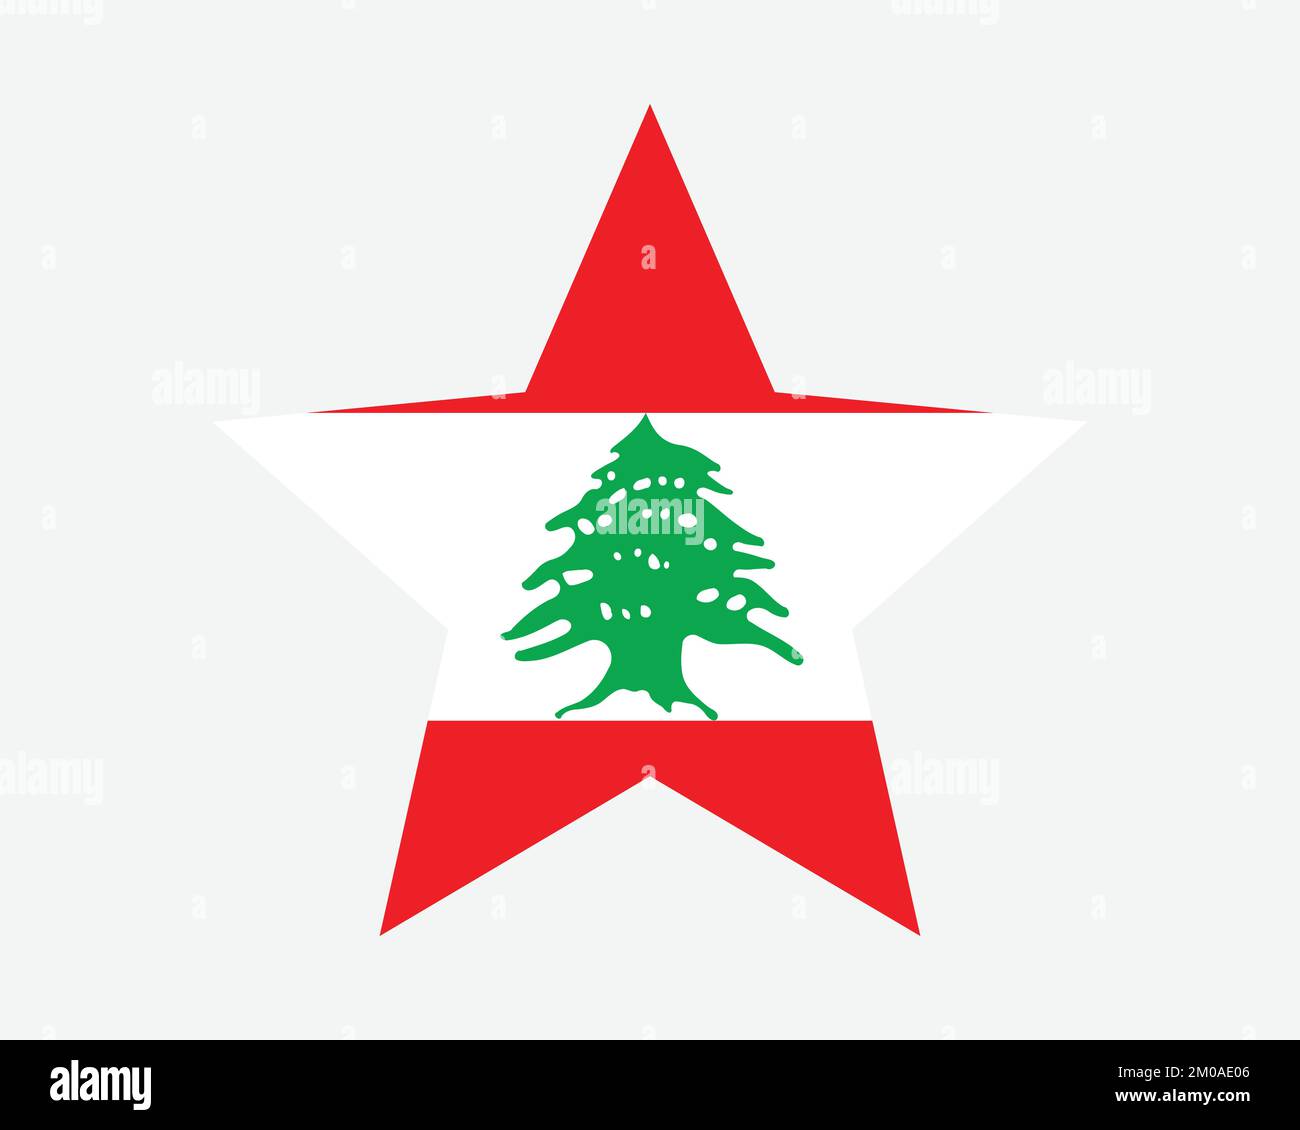 Lebanon Star Flag. Lebanese Republic Star Shape Flag. Republic of Lebanon Country National Banner Icon Symbol Vector Flat Artwork Graphic Illustration Stock Vector